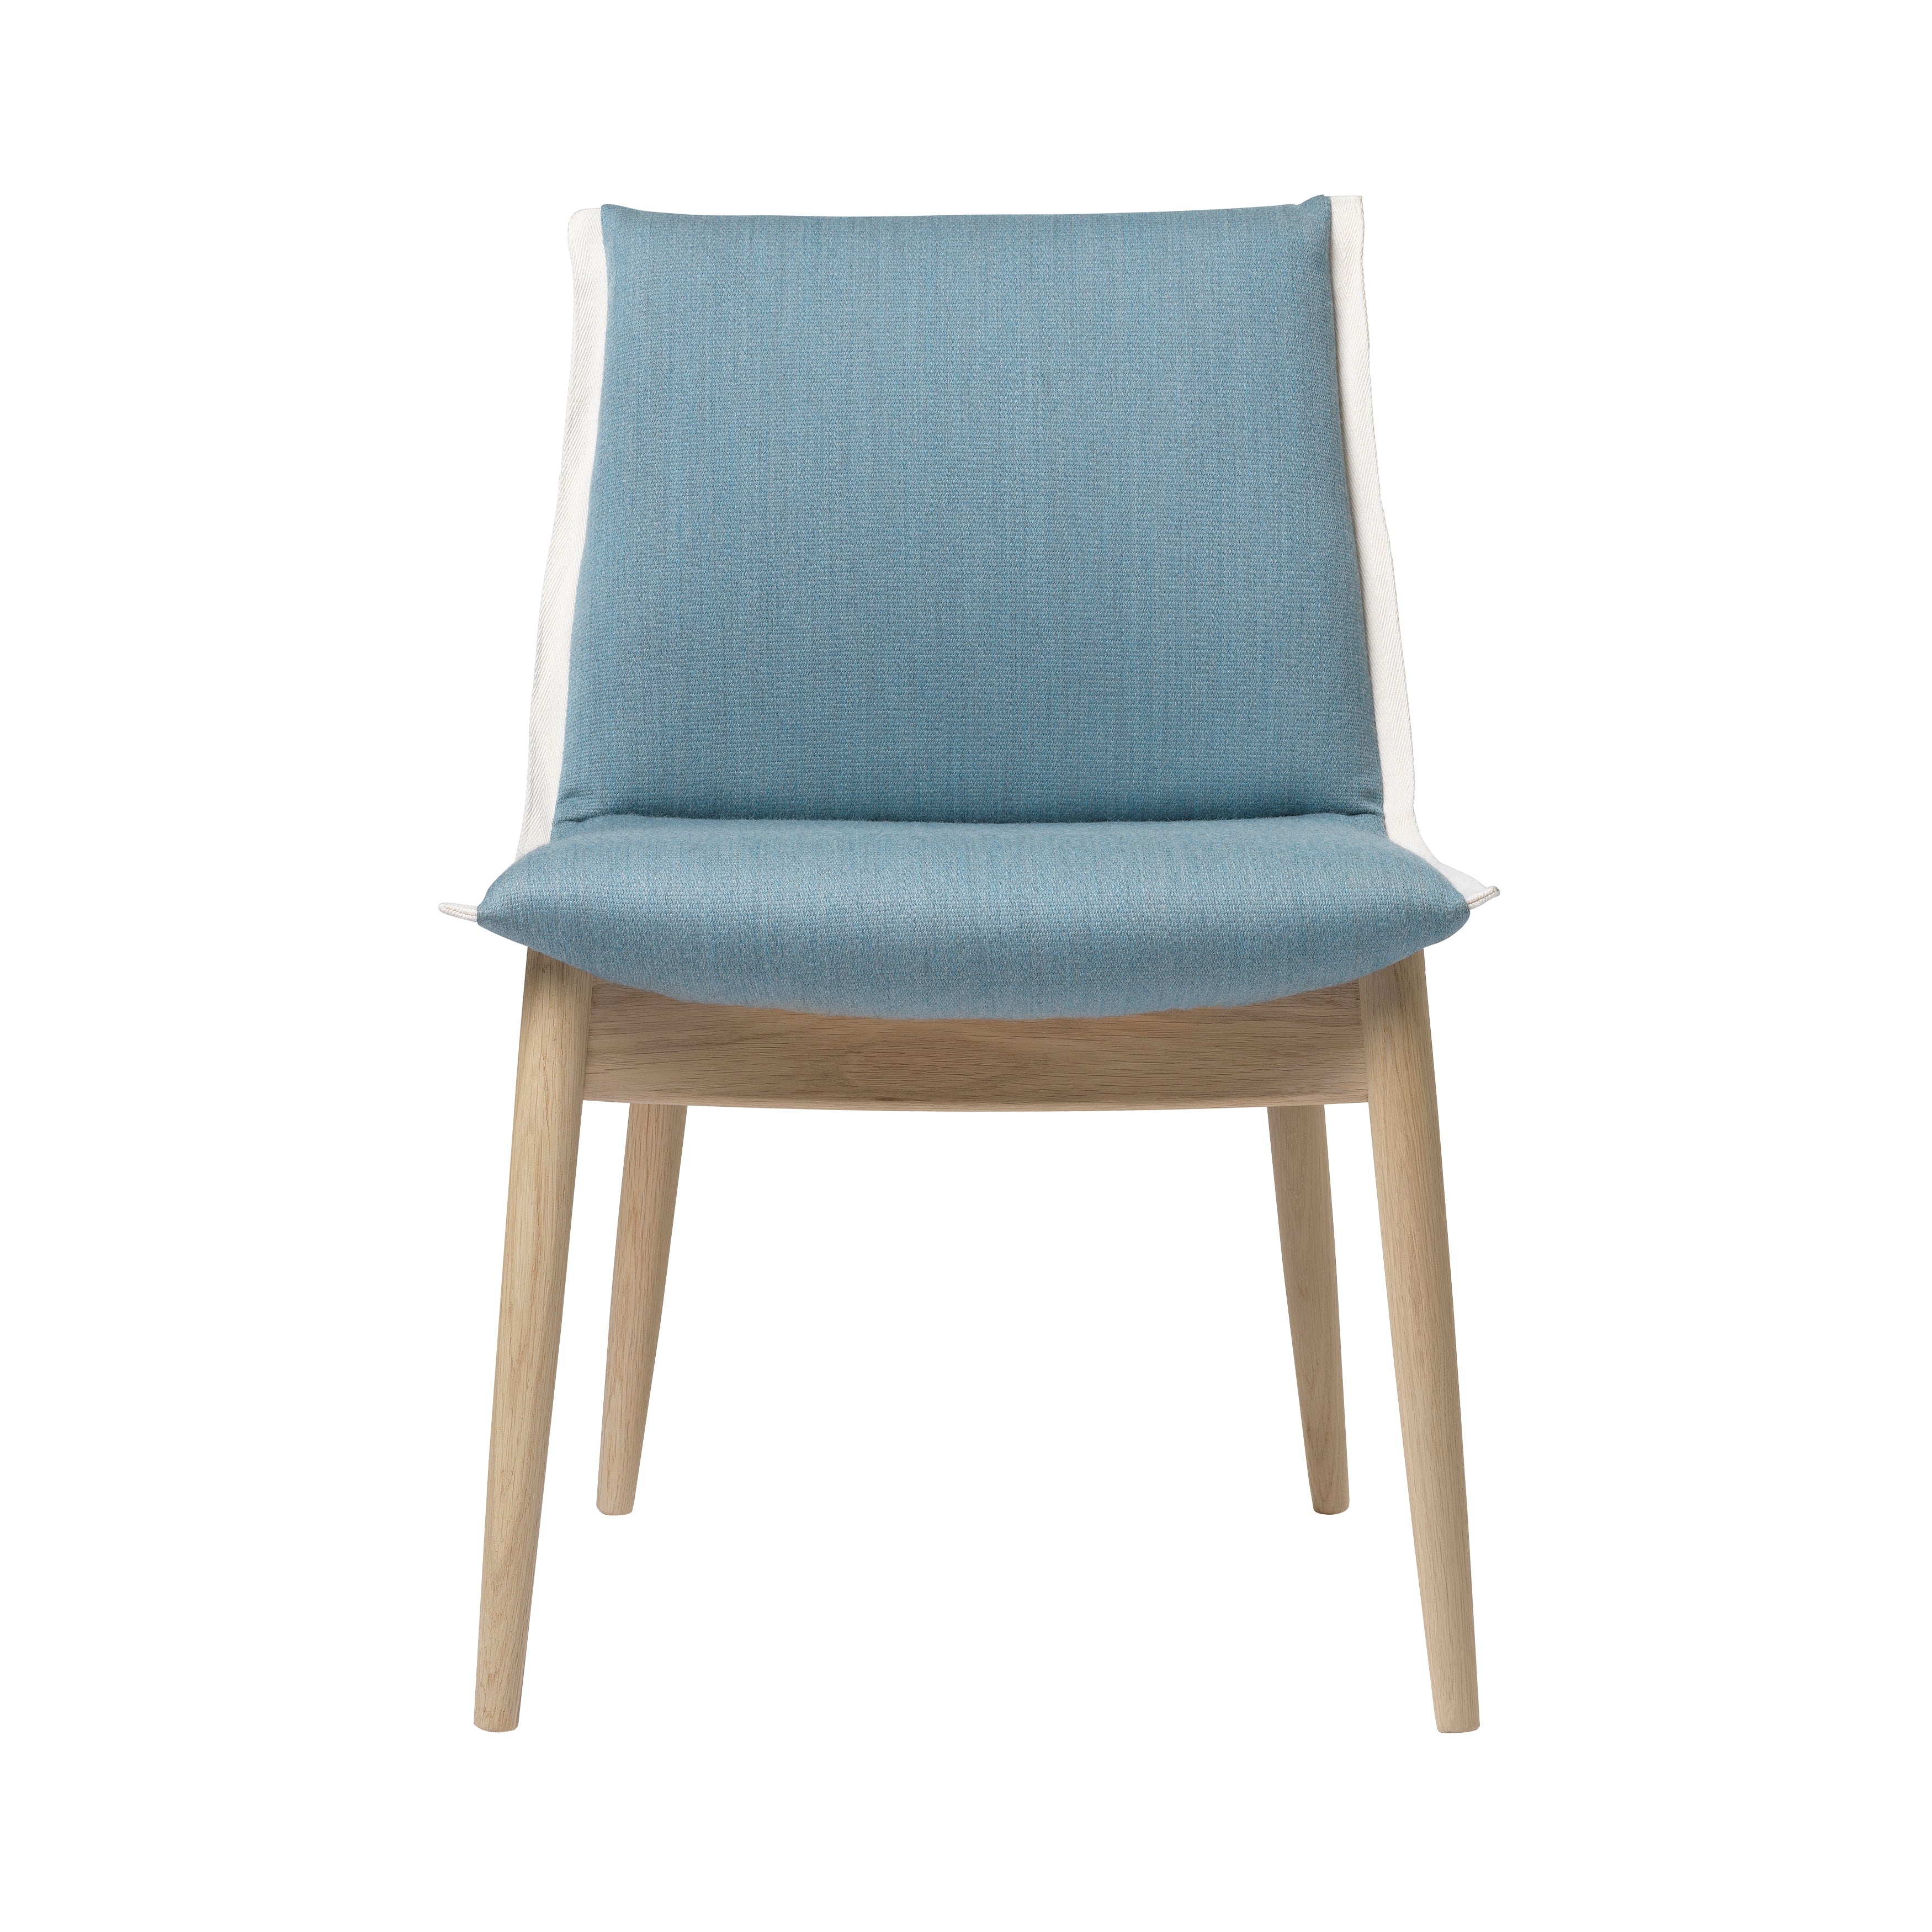 E004 Embrace Chair: Natural Edging Strip + White Oiled Oak